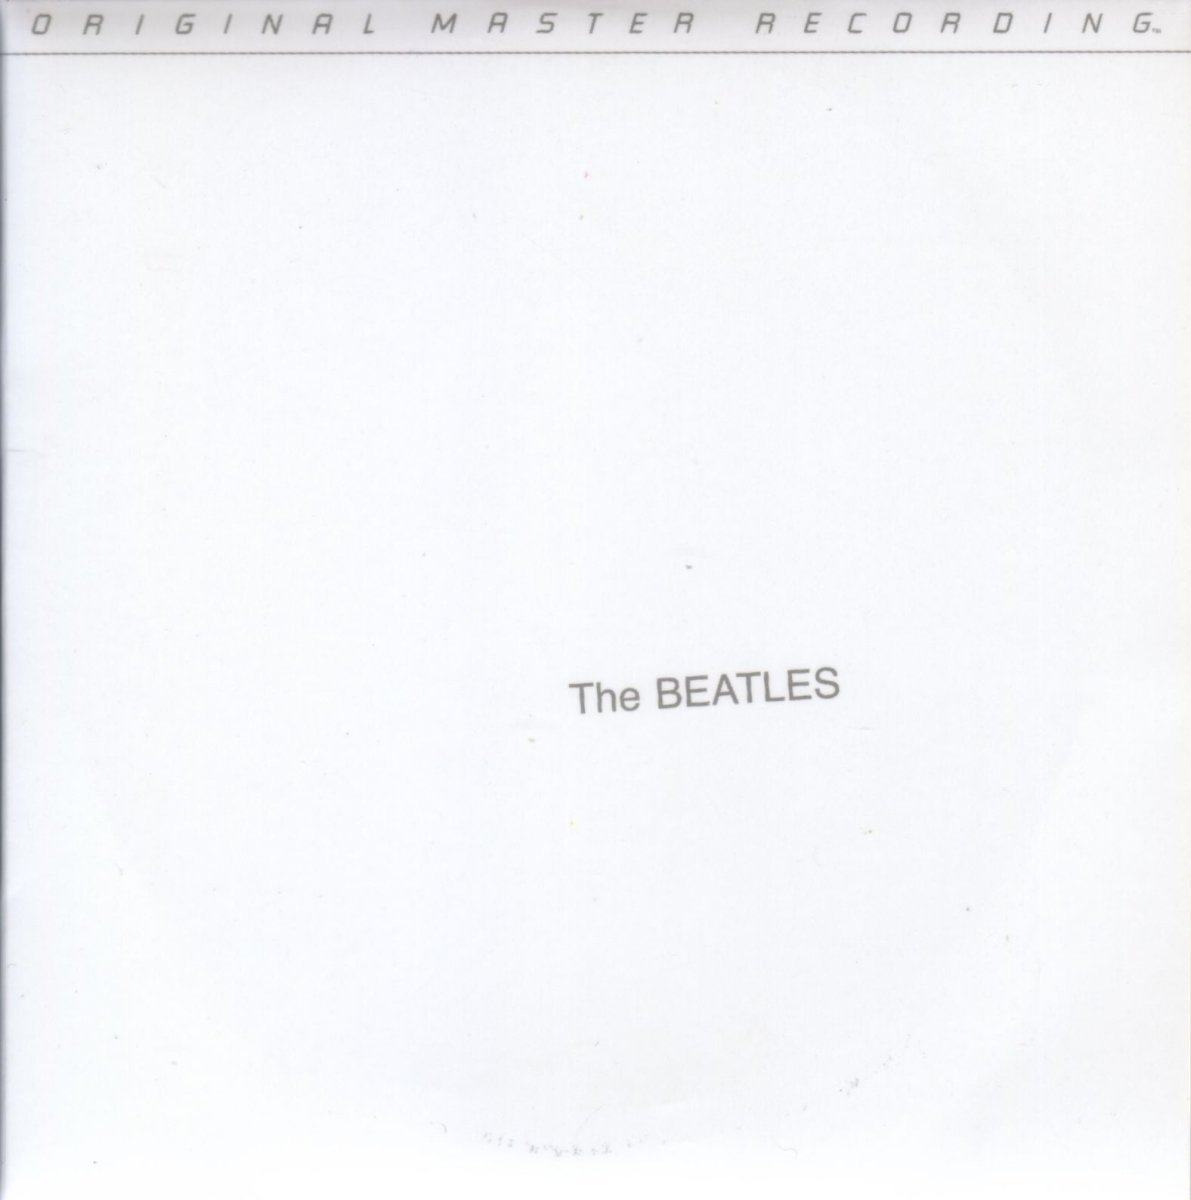 The Beatles - The Beatles Vinyl